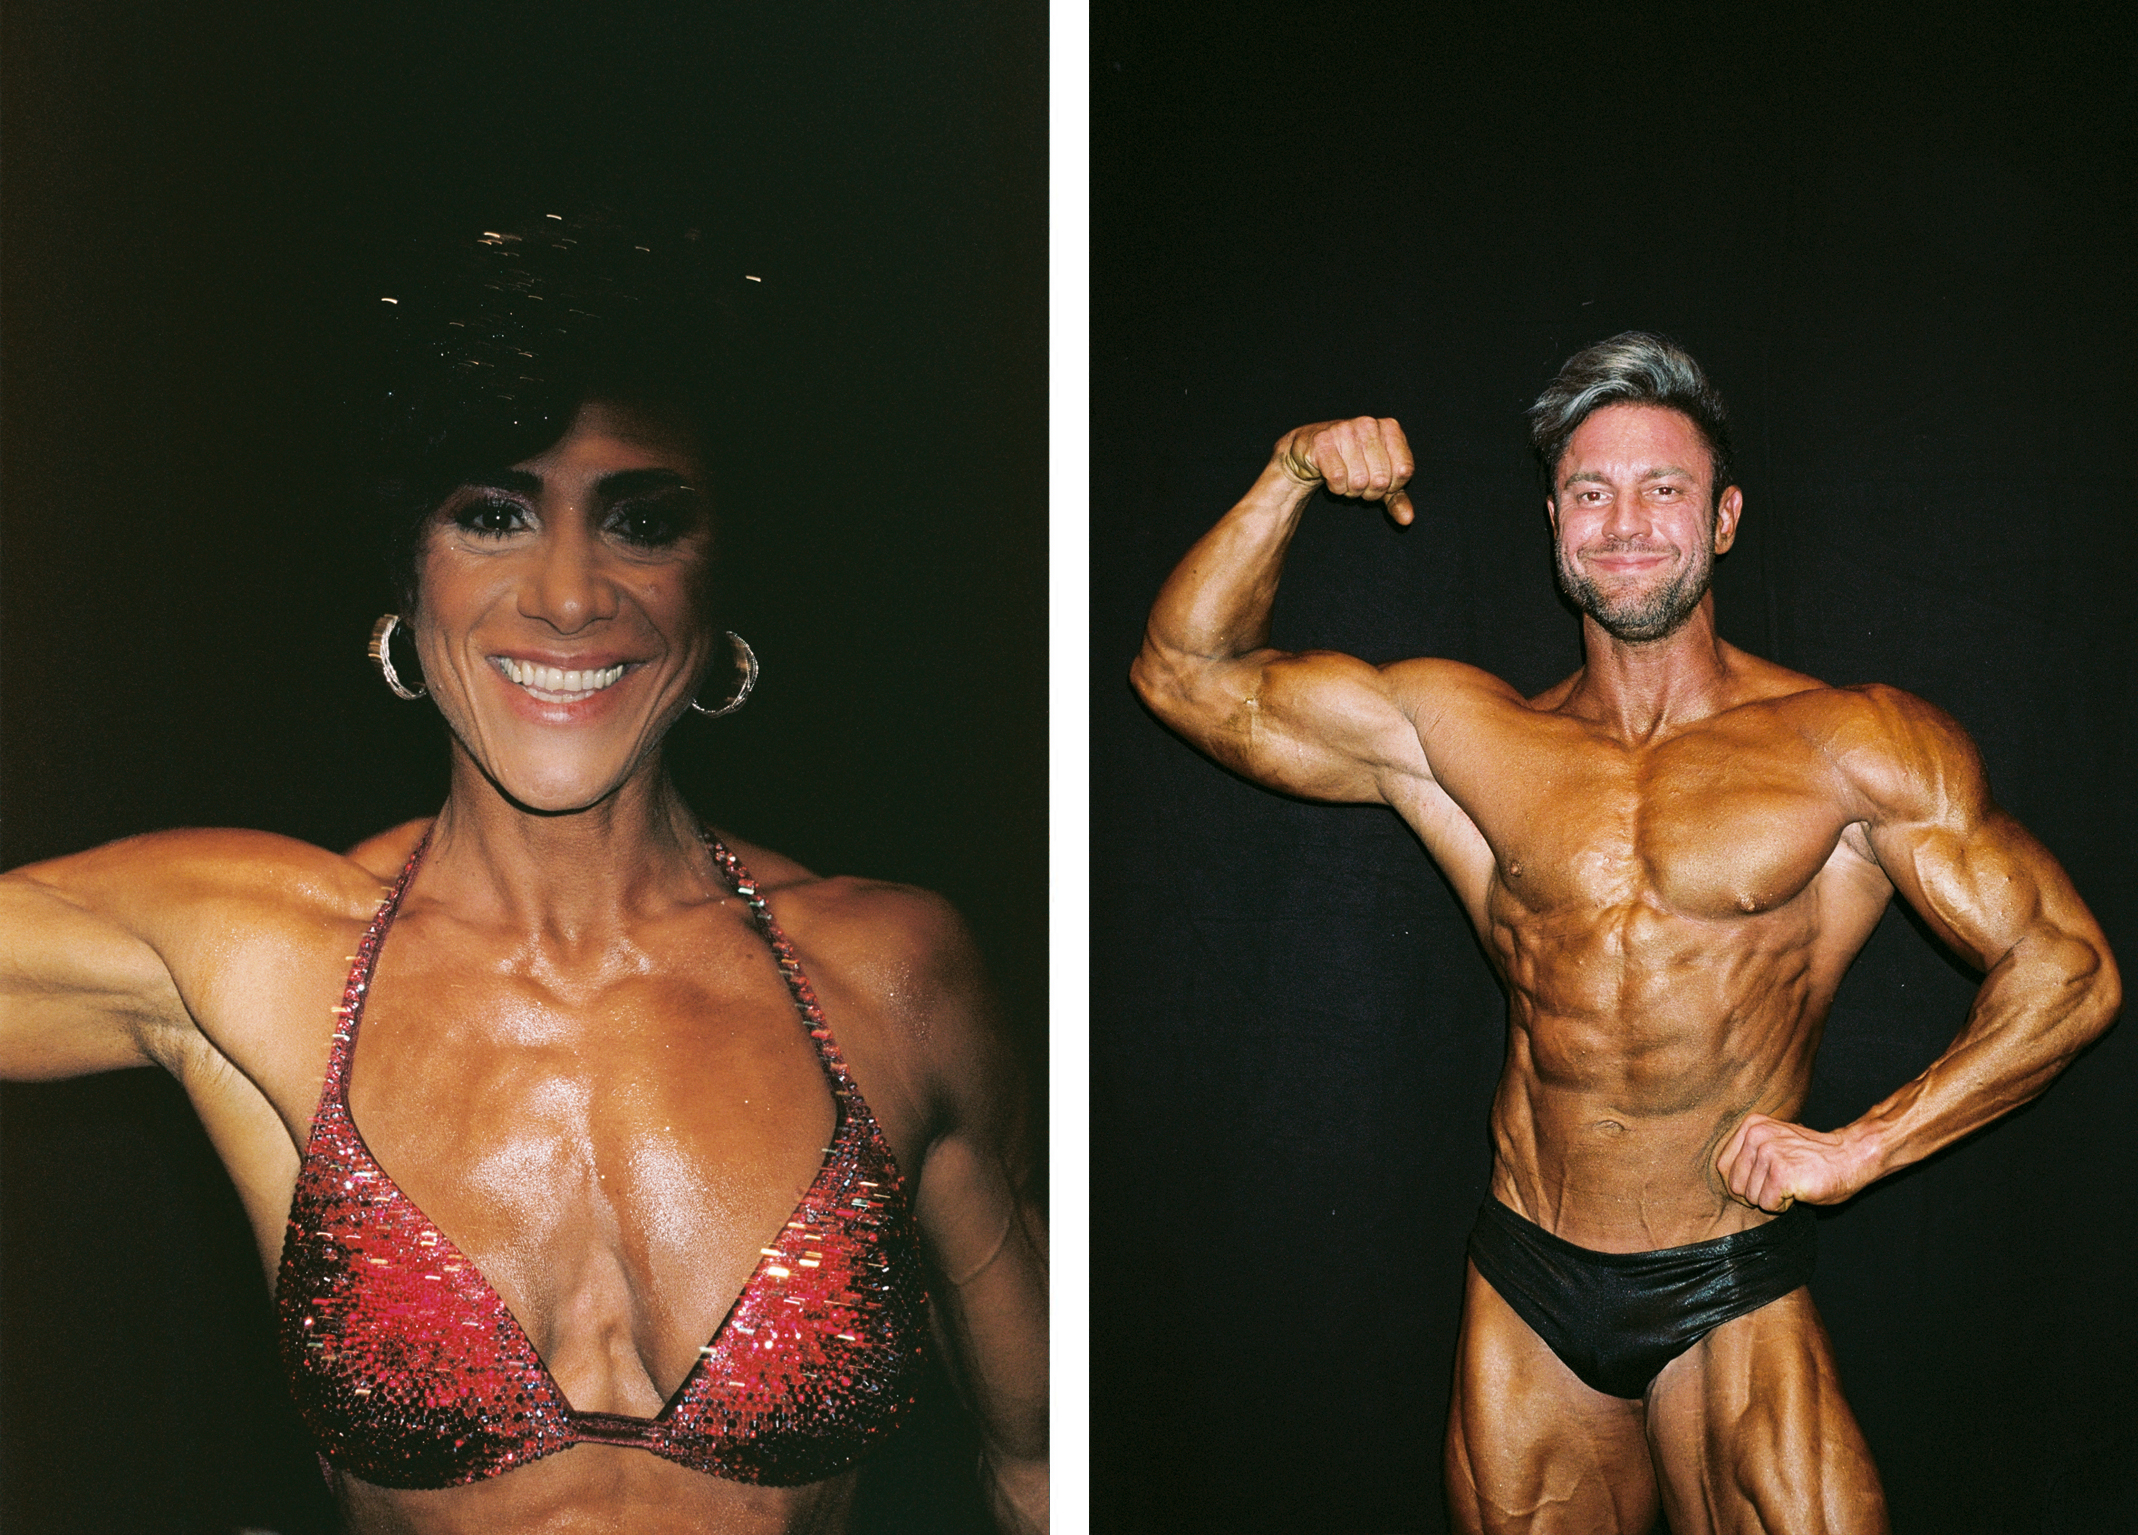 Nikolas-Petros Androbik, bodybuilding, photography - Composite image: photo on the left is a smiling female bodybuilder, photo on the right is a smiling male bodybuilder. 